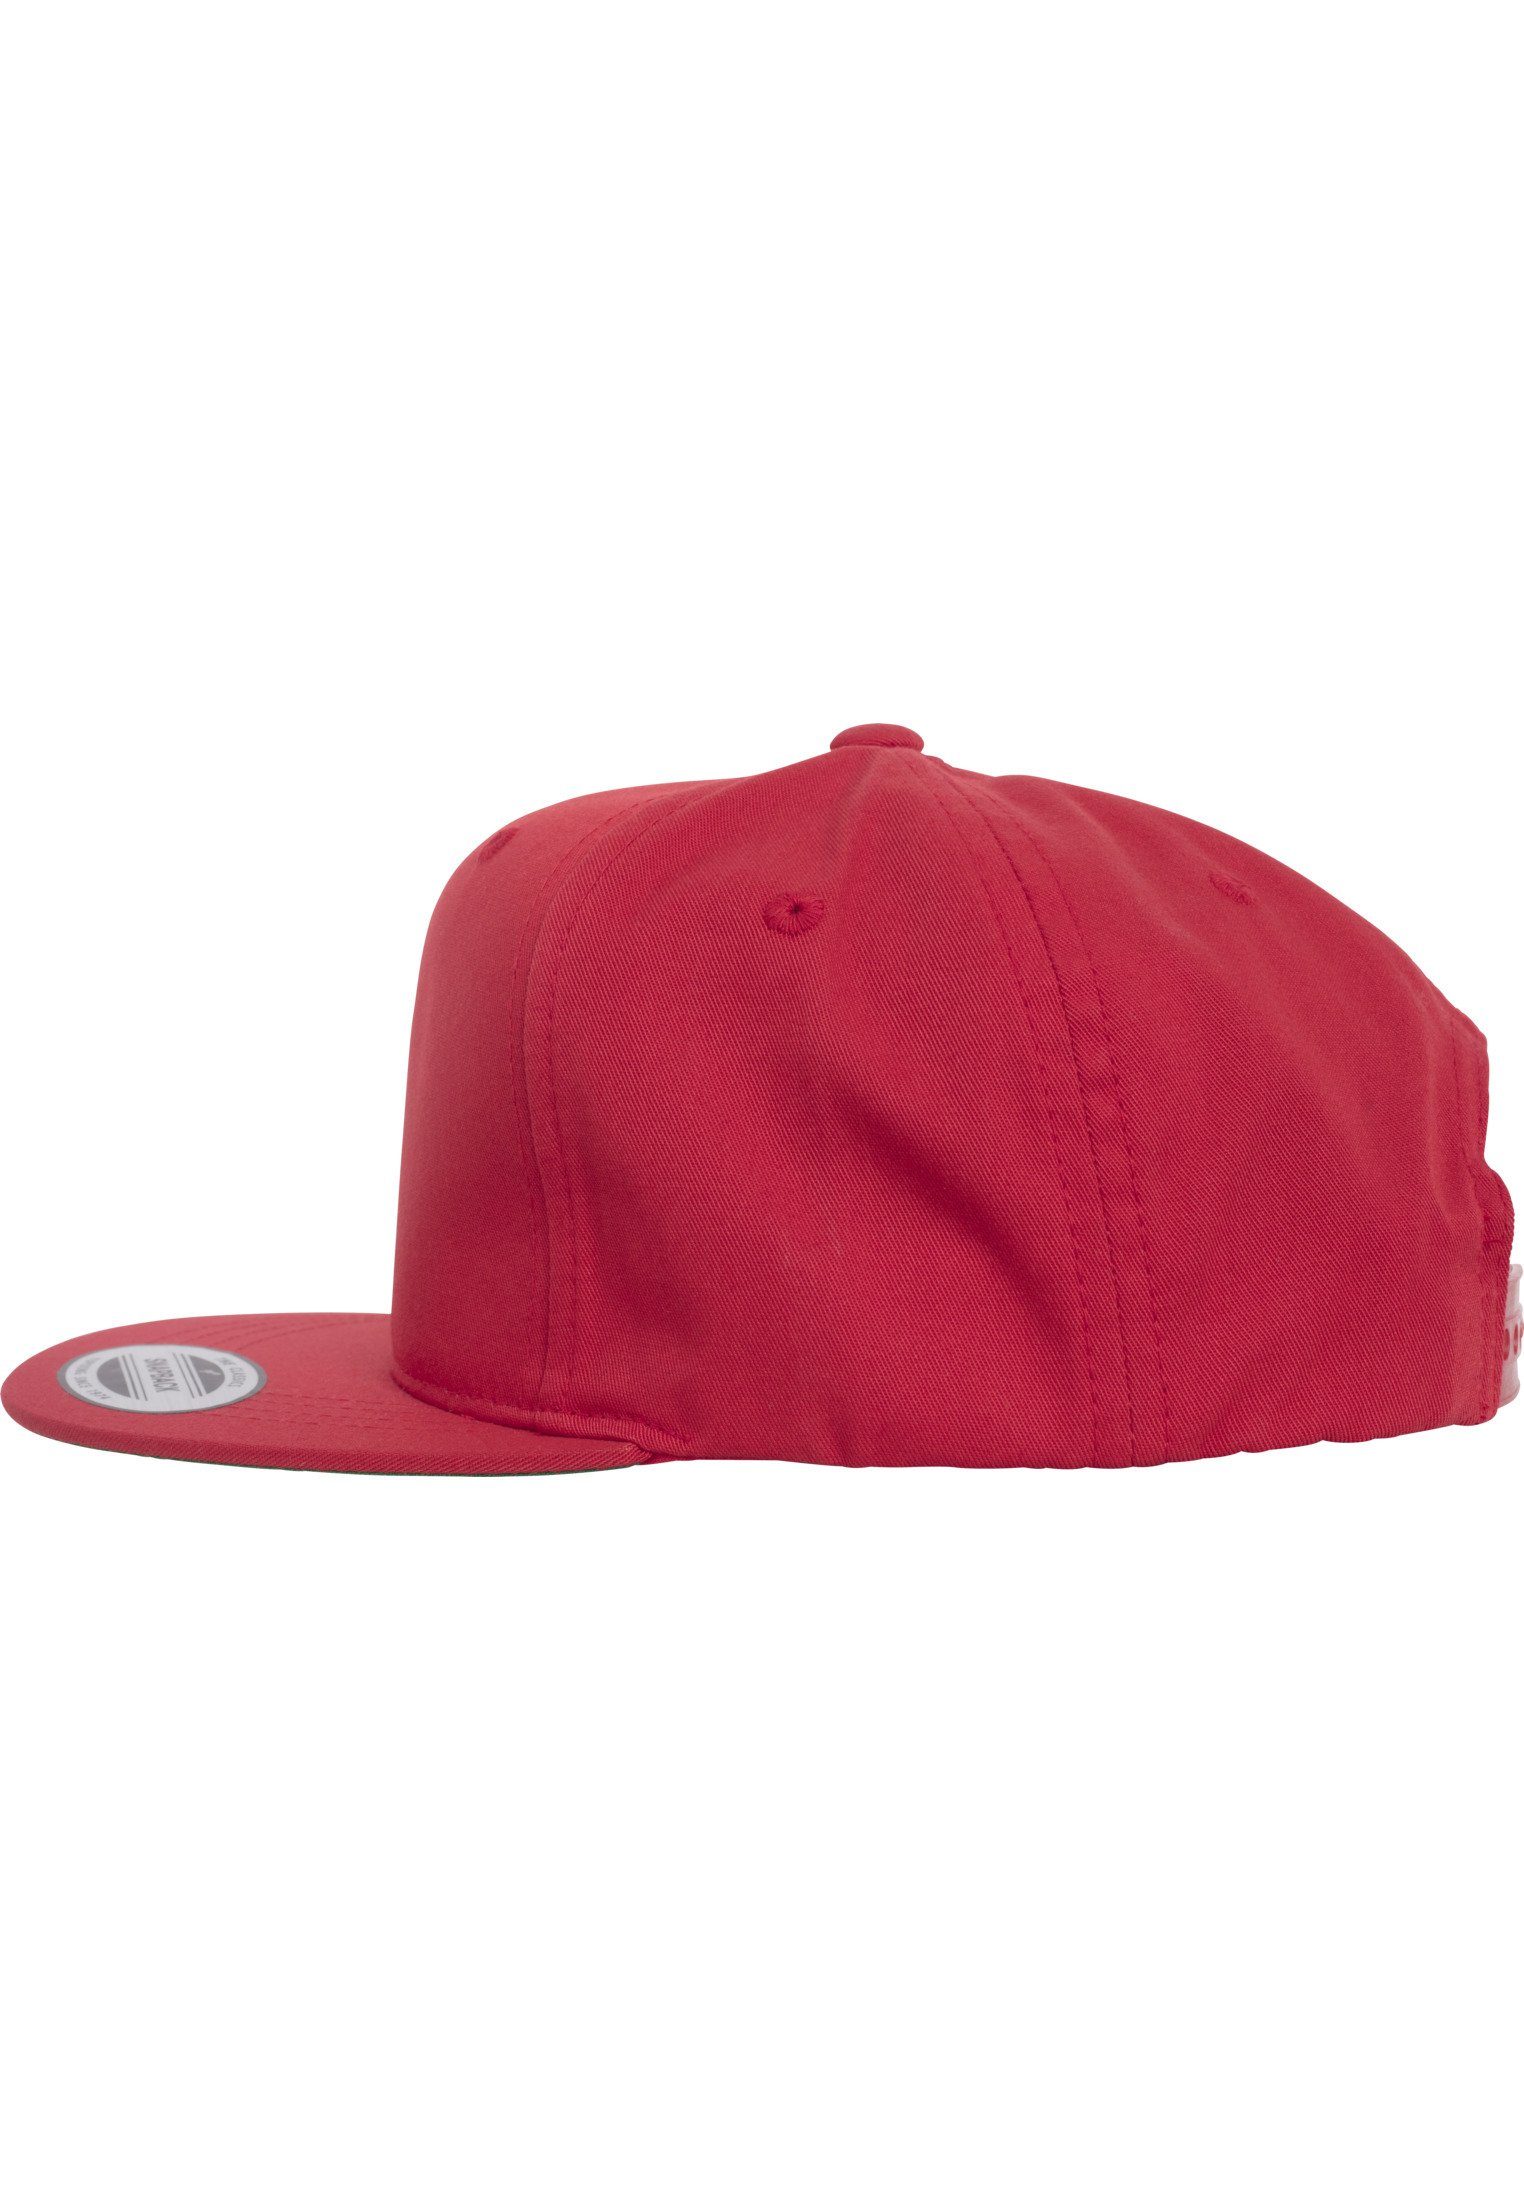 Pro-Style Flex Cap Flexfit Snapback Cap Twill Youth Snapback red